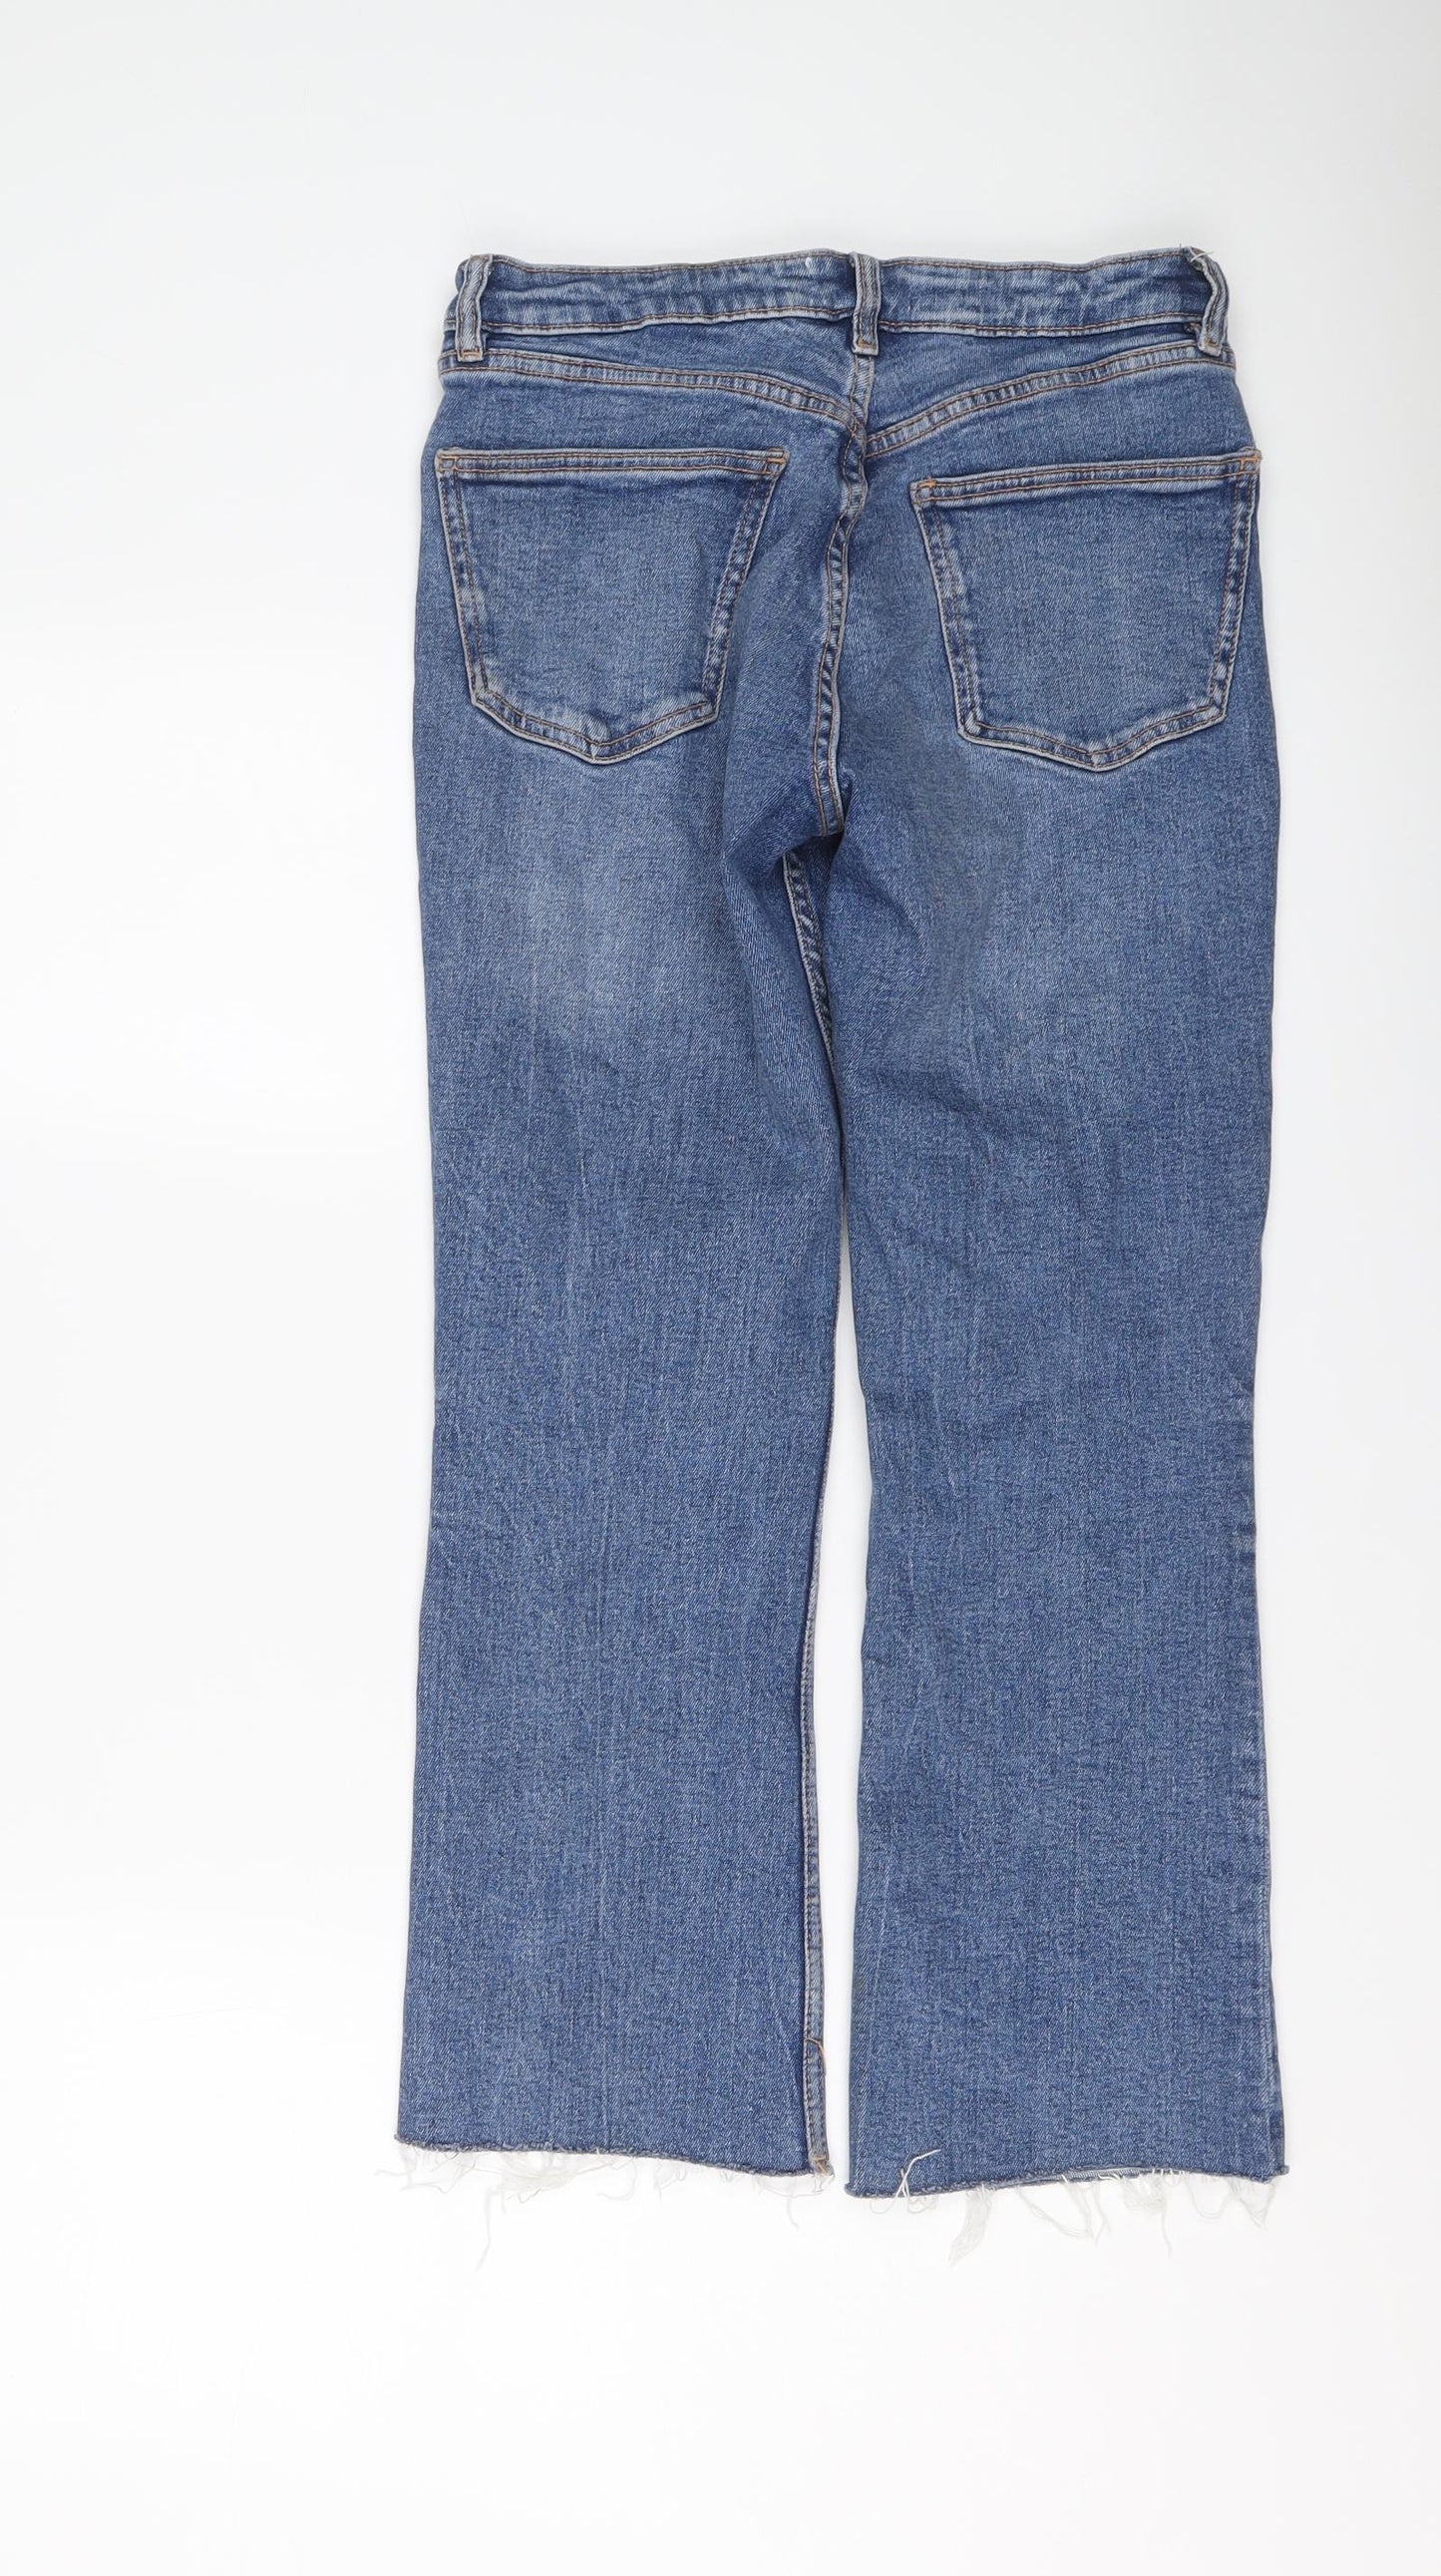 Zara Womens Blue Cotton Bootcut Jeans Size 10 L25 in Regular Button